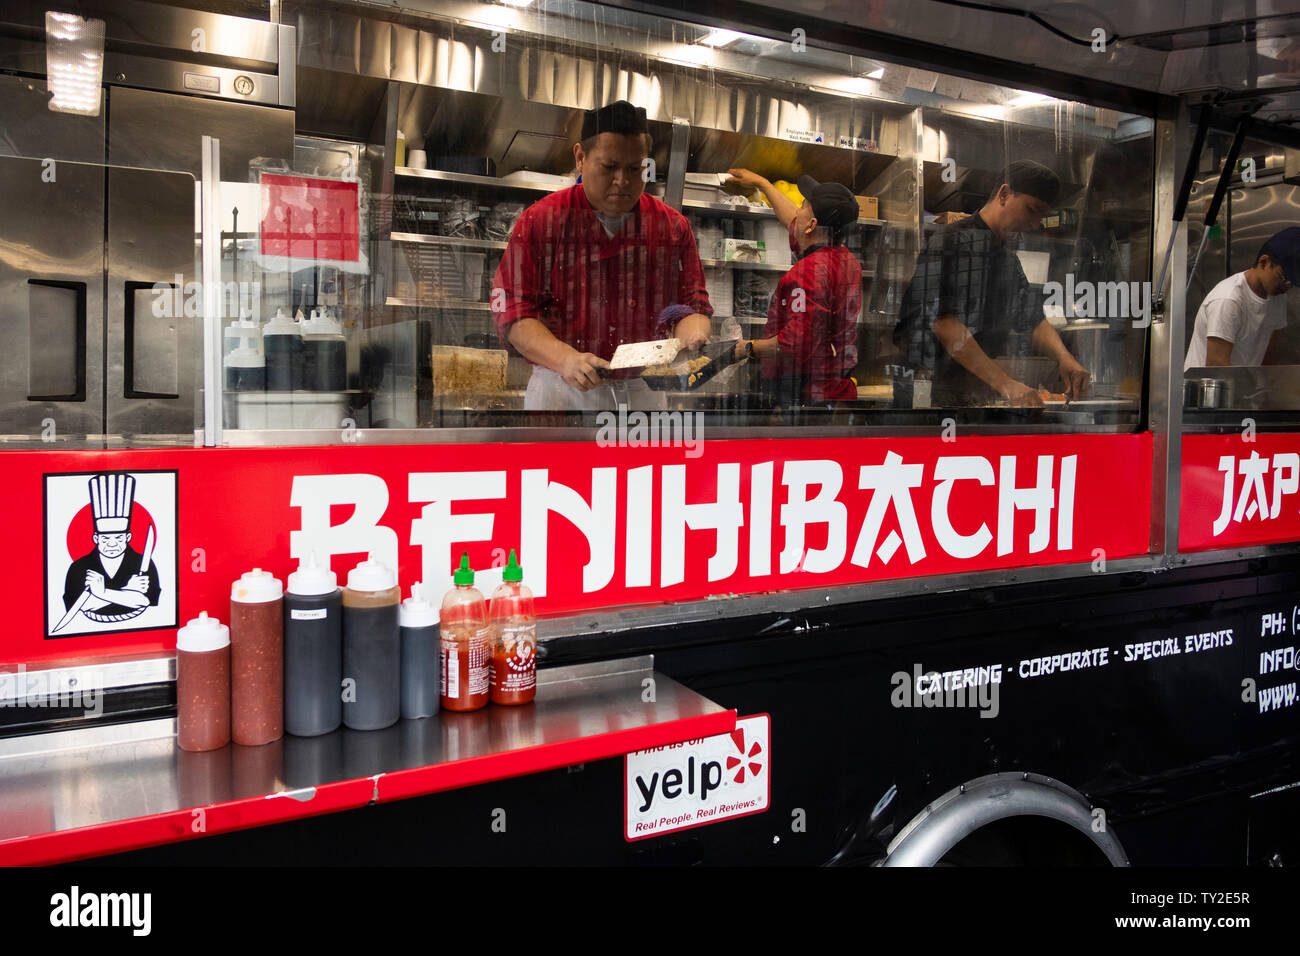 Benihana Challenges Beni Yaki Food Trucks in L.A. Copyright Suit